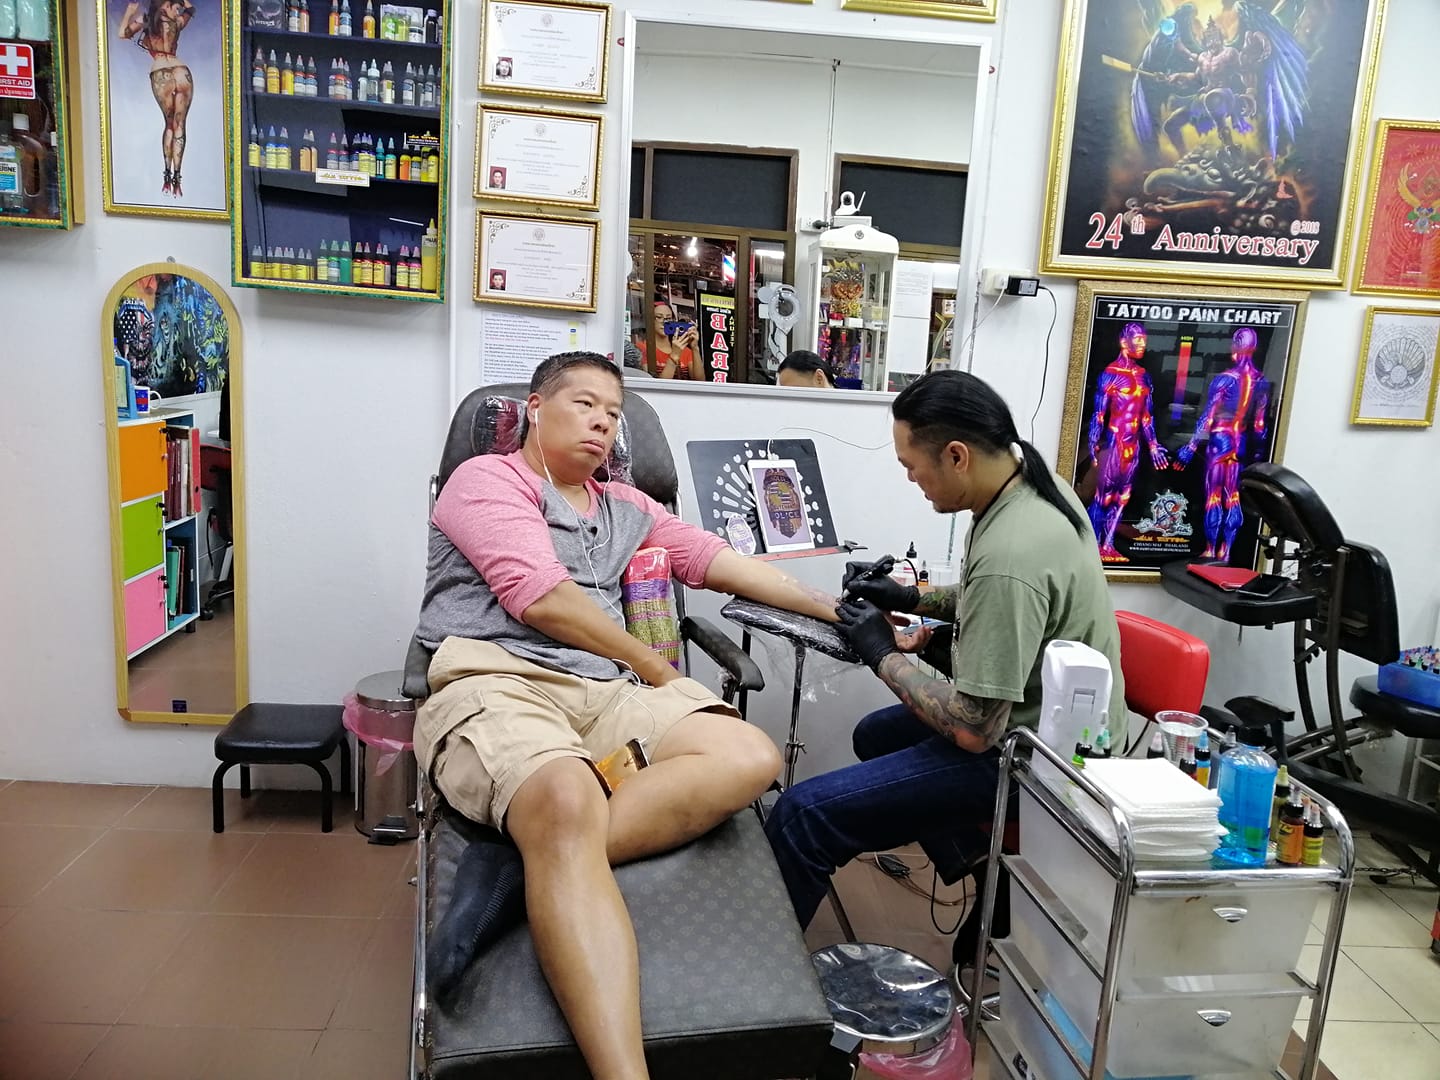 studio tattoo chiang mai, tattoo chiangmai, chiang mai tattoo, chiangmai tattoo, tattoo thailand, thailand tattoo, แทททูเชียงใหม่, ร้านสักเชียงใหม่, ร้านสักแทททู, แทททูเชียงใหม่, ร้านสักเชียงใหม่, ร้านสักแทททู, swashdrive gen 8 Thailand, thai tattoo, professinal tattoo thai, body piercings in chiang mai, body piercings chiang mai, body pain chiangmai, magic tattoo chiang mai, yant thai style, tattoo chiang mai thailand, thai traditional, best tattoo, ร้านสัก, รับสักลาย, ช่างสัก, แก้ลายสัก, สักยันต์, รอยสัก, สักลาย, อาร์ทติส, แบบลายสัก, ออกแบบลายสัก, เจาะ, แทททู, งานสักลายไทย, ลายสักไทย, บอดี้เพ้นท์, อุปกรณ์สักลาย, รูปลายสัก, รับสักร่างกาย, tattoo picture, tattoo machine, tattoo supply, tattoo service, tattoo studio, body piercing, tattoo design